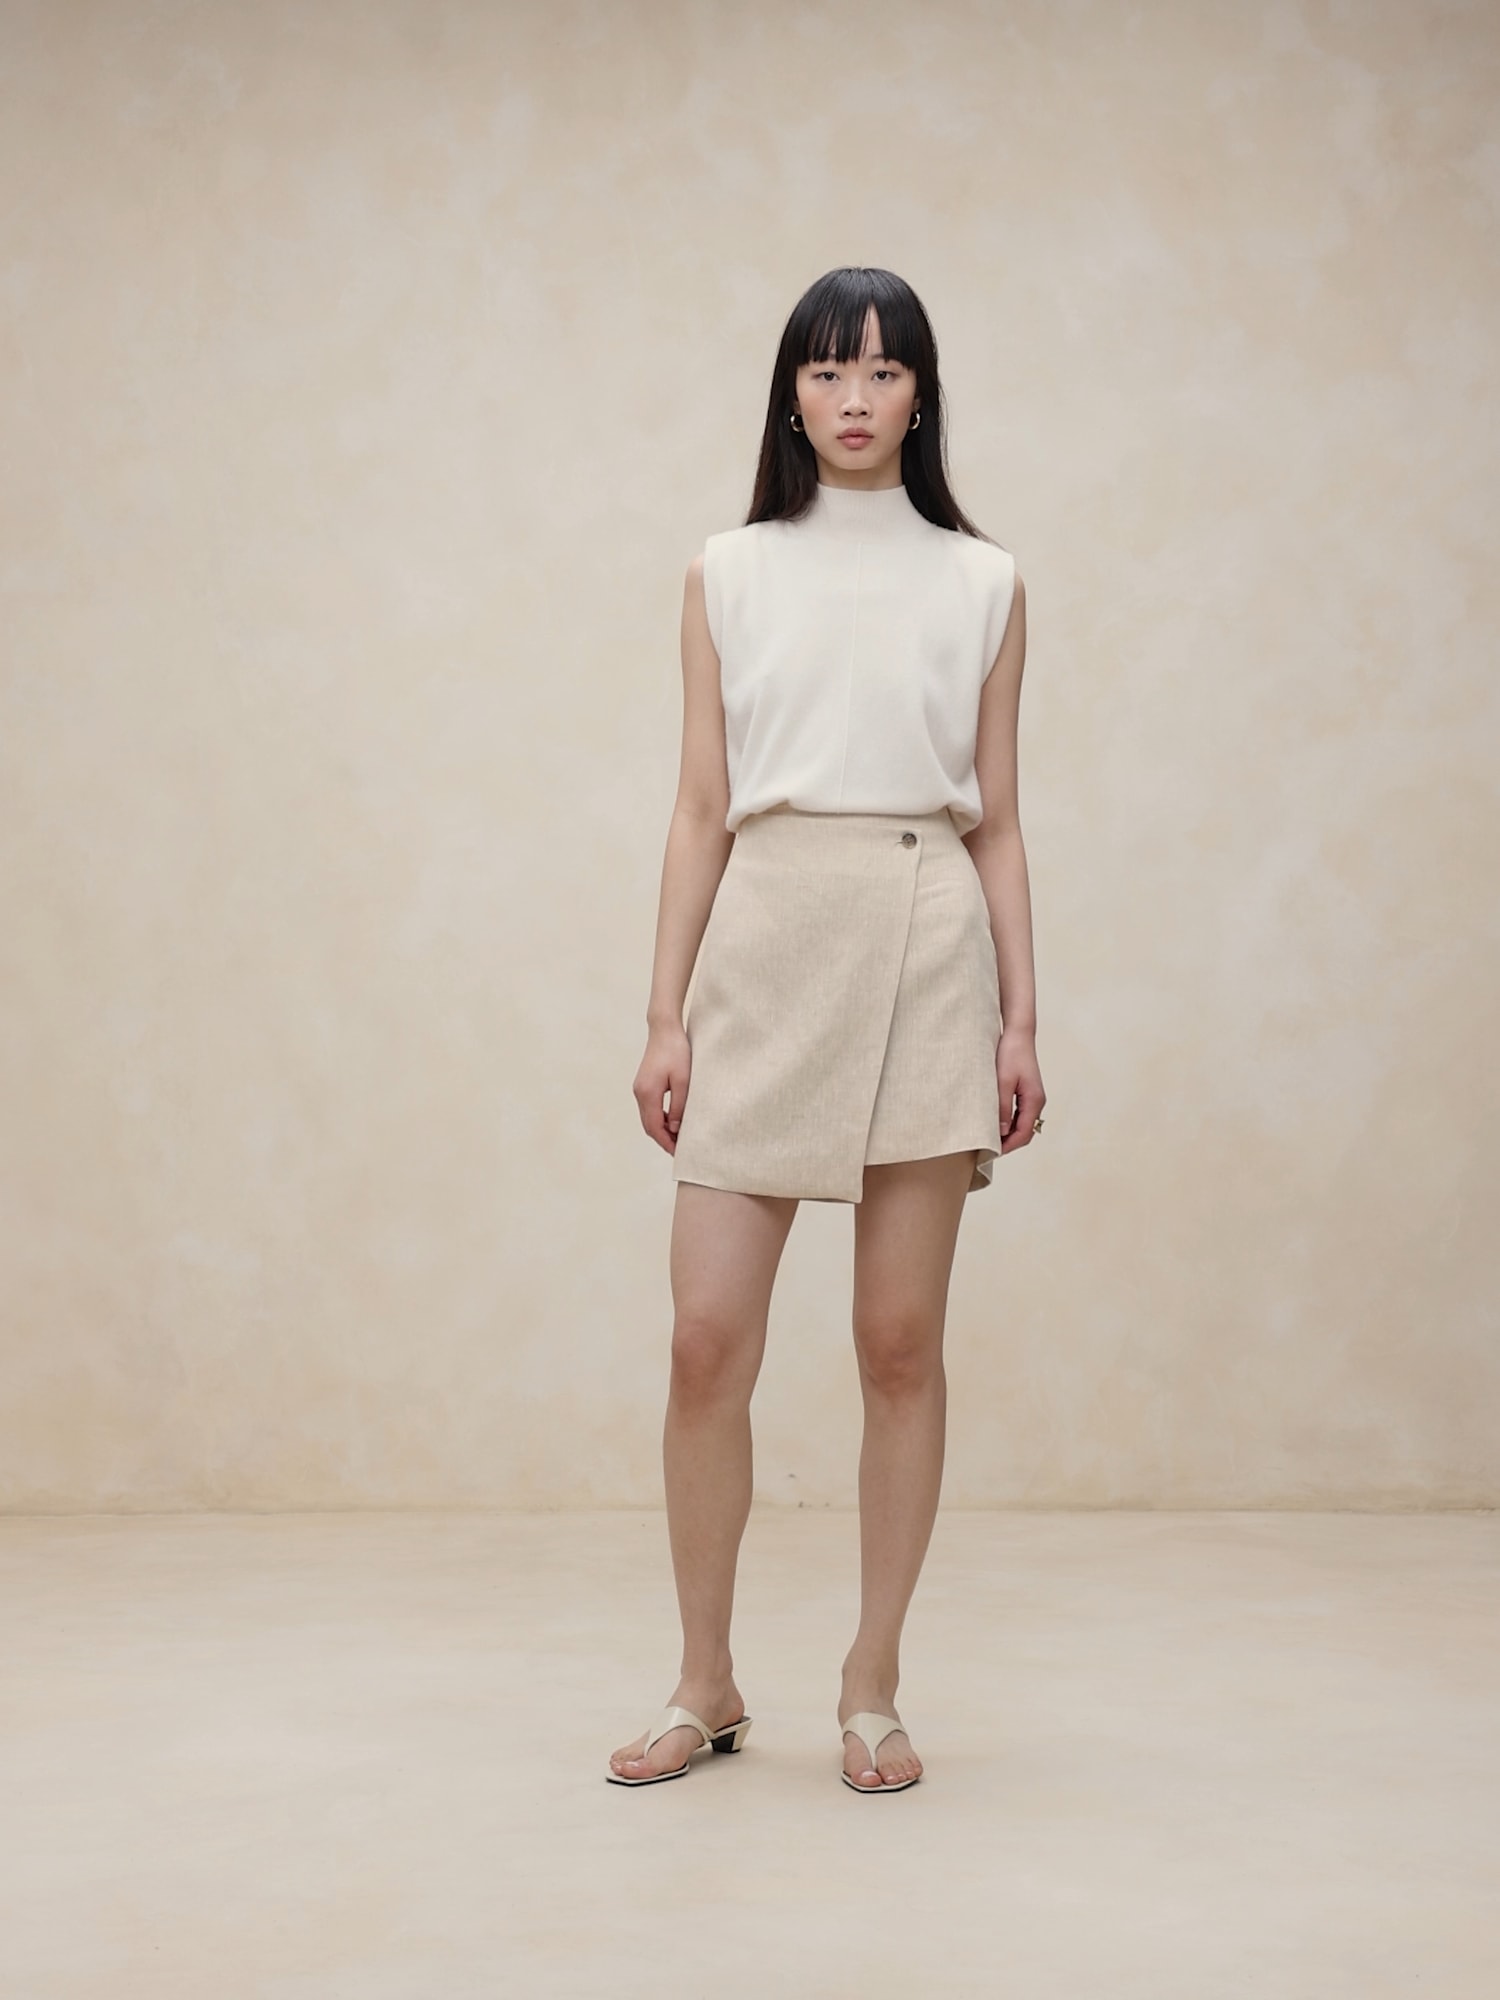 Linen Mini Skirt ADELLE, A Line Linen Skirt, Short Skirt From Natural  Linen, Linen Skirts for Women, Handmade Linen Clothes 